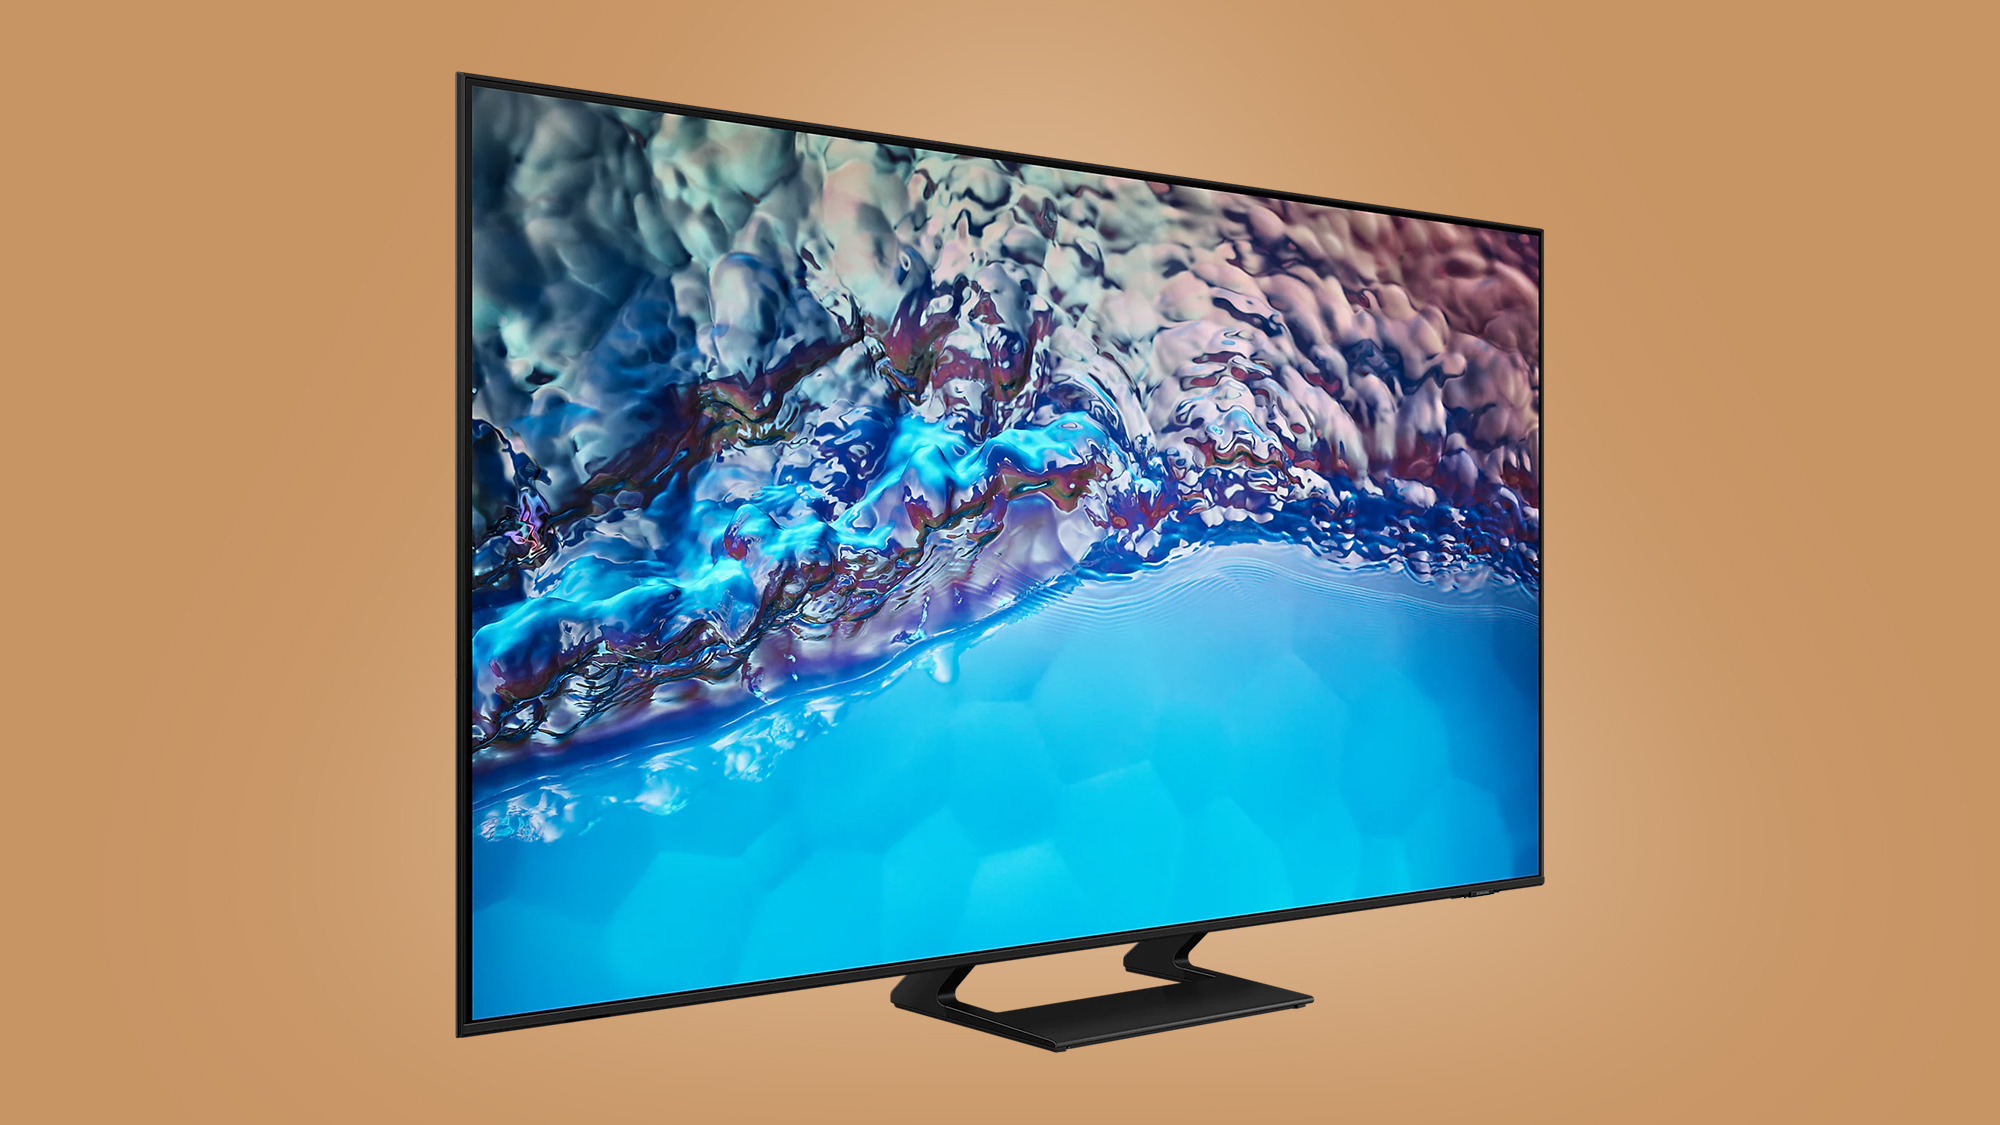 Samsung BU8500 TV on orange background